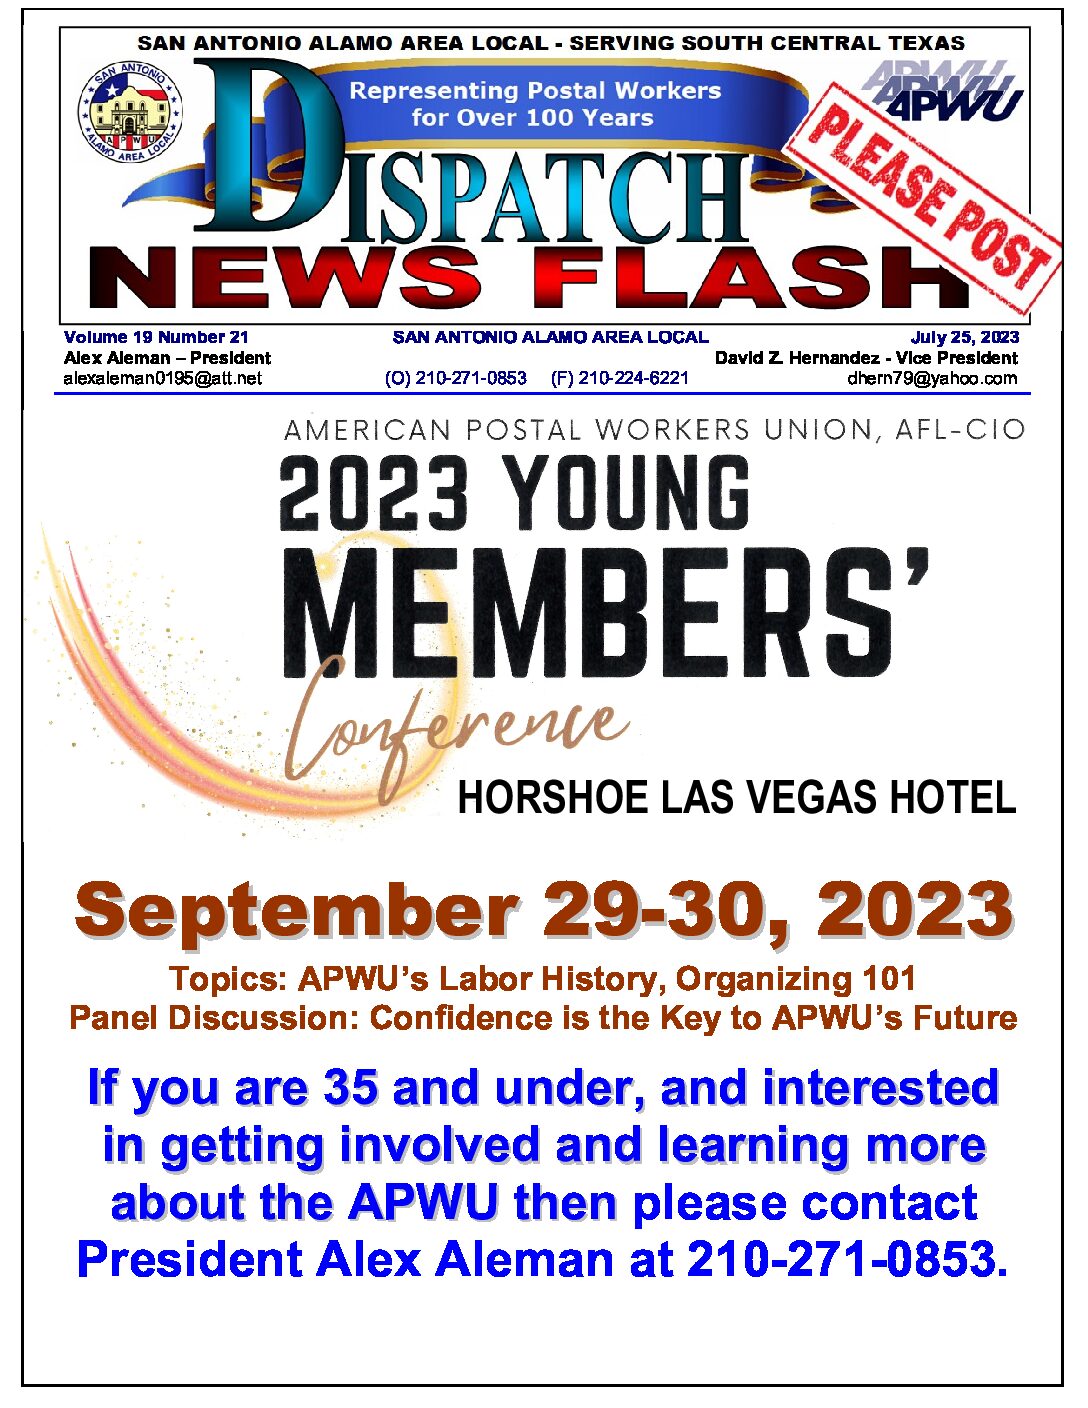 NewsFlash 19-21 APWU Young Members Conference - 